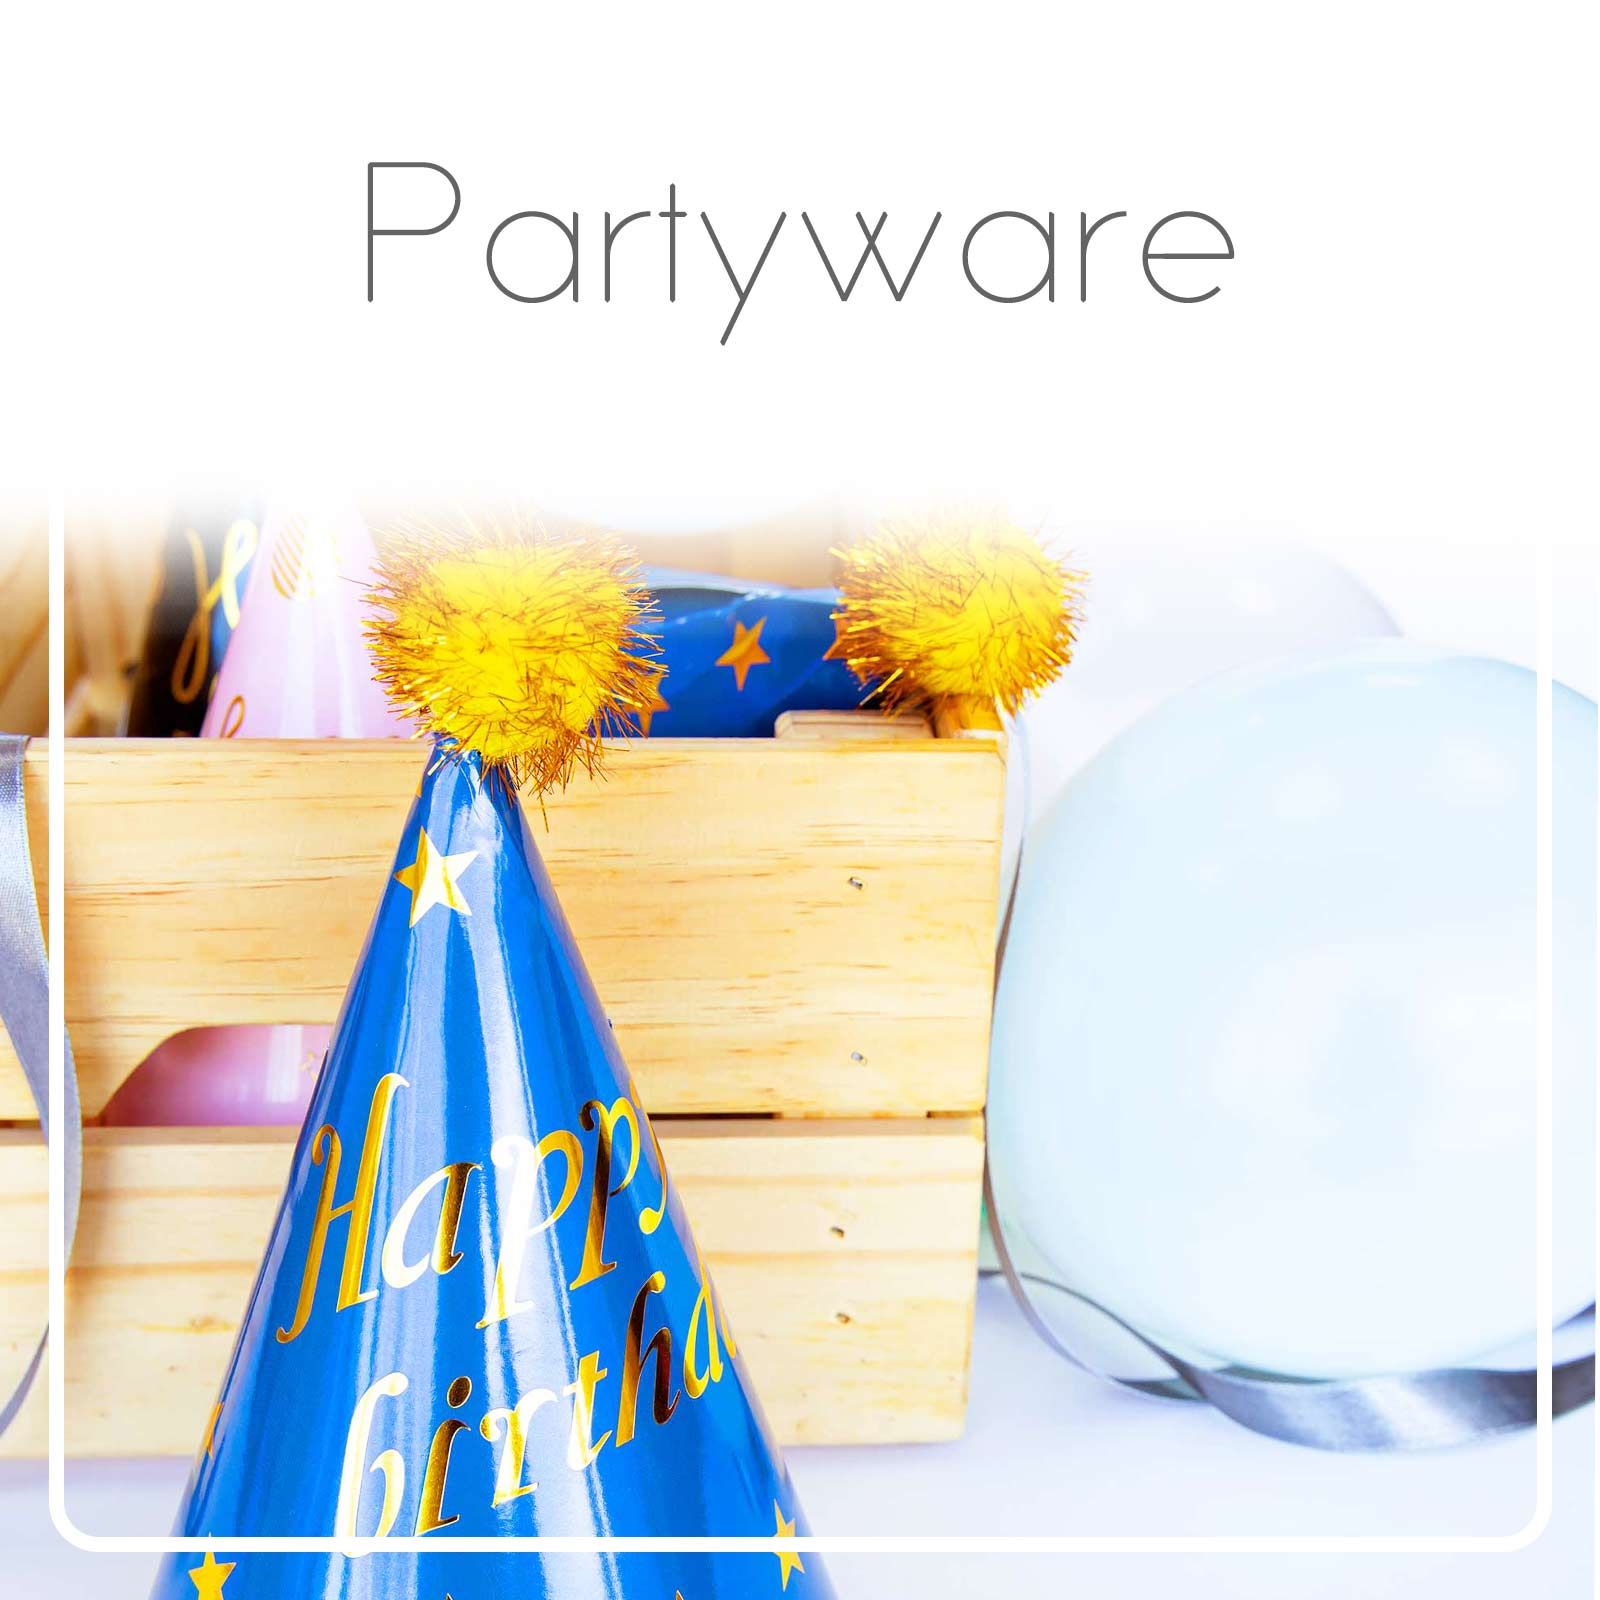 Partyware - อุปกรณ์ปาร์ตี้และชุดอาหารปาร์ตี้